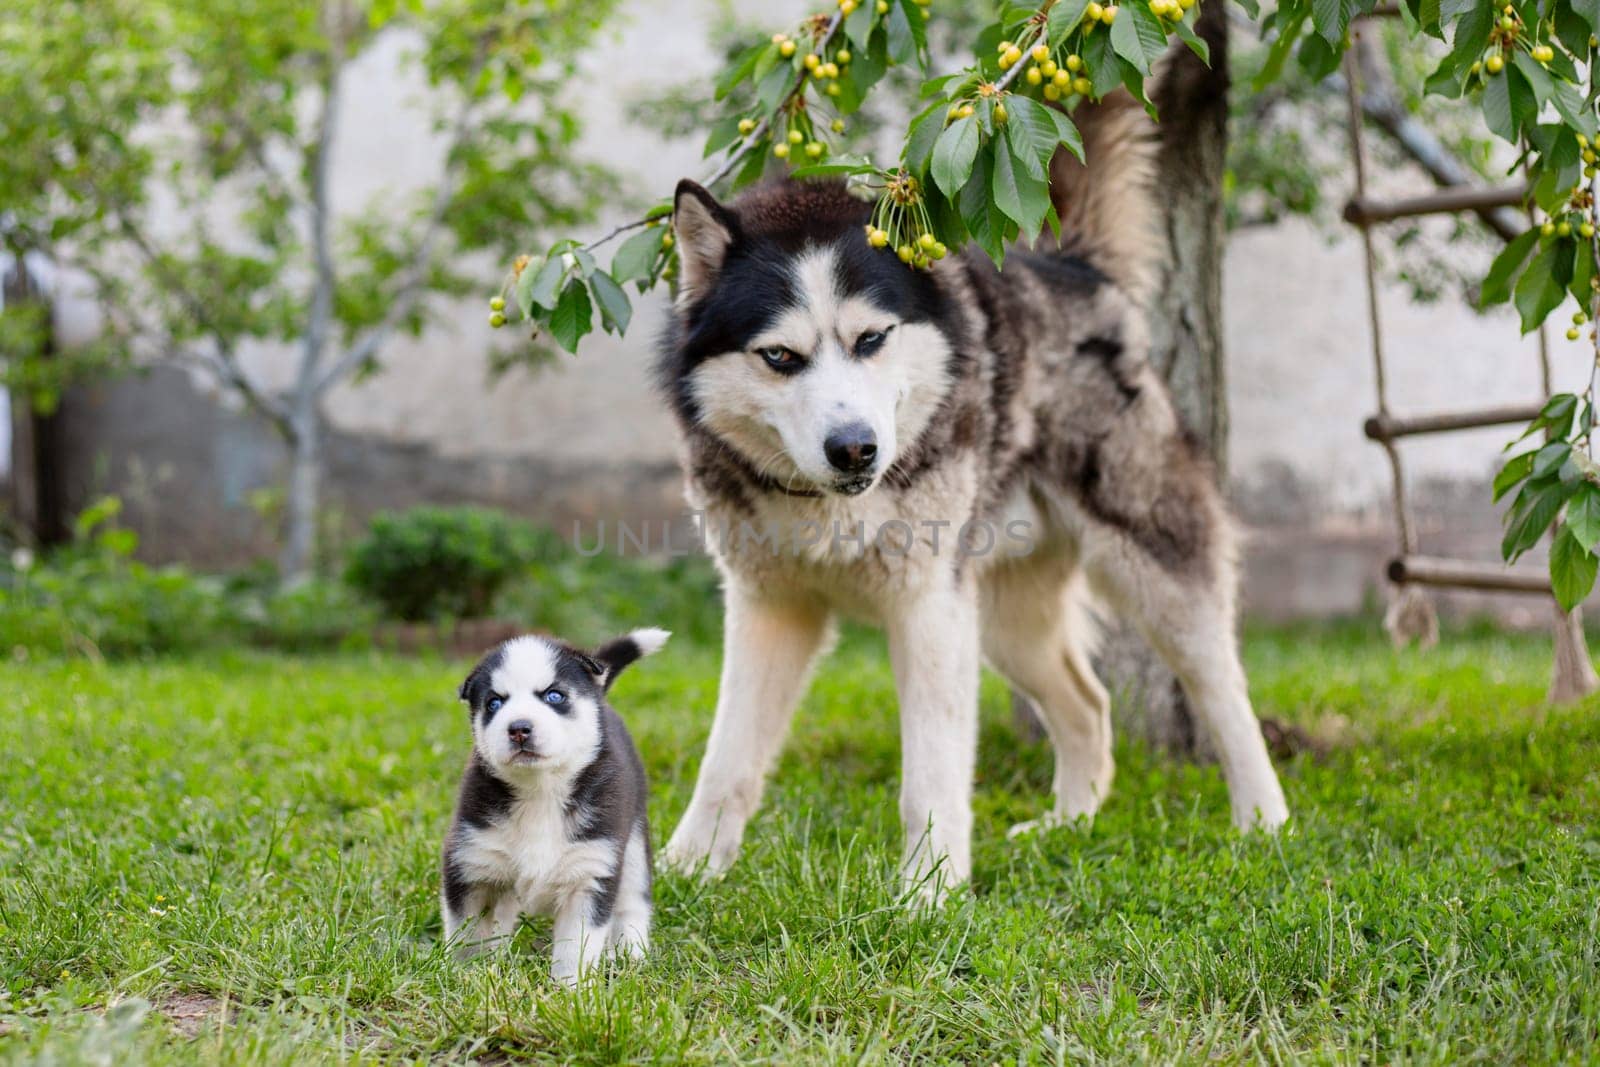 Alaskan Malamute and Puppy in Garden by andreyz